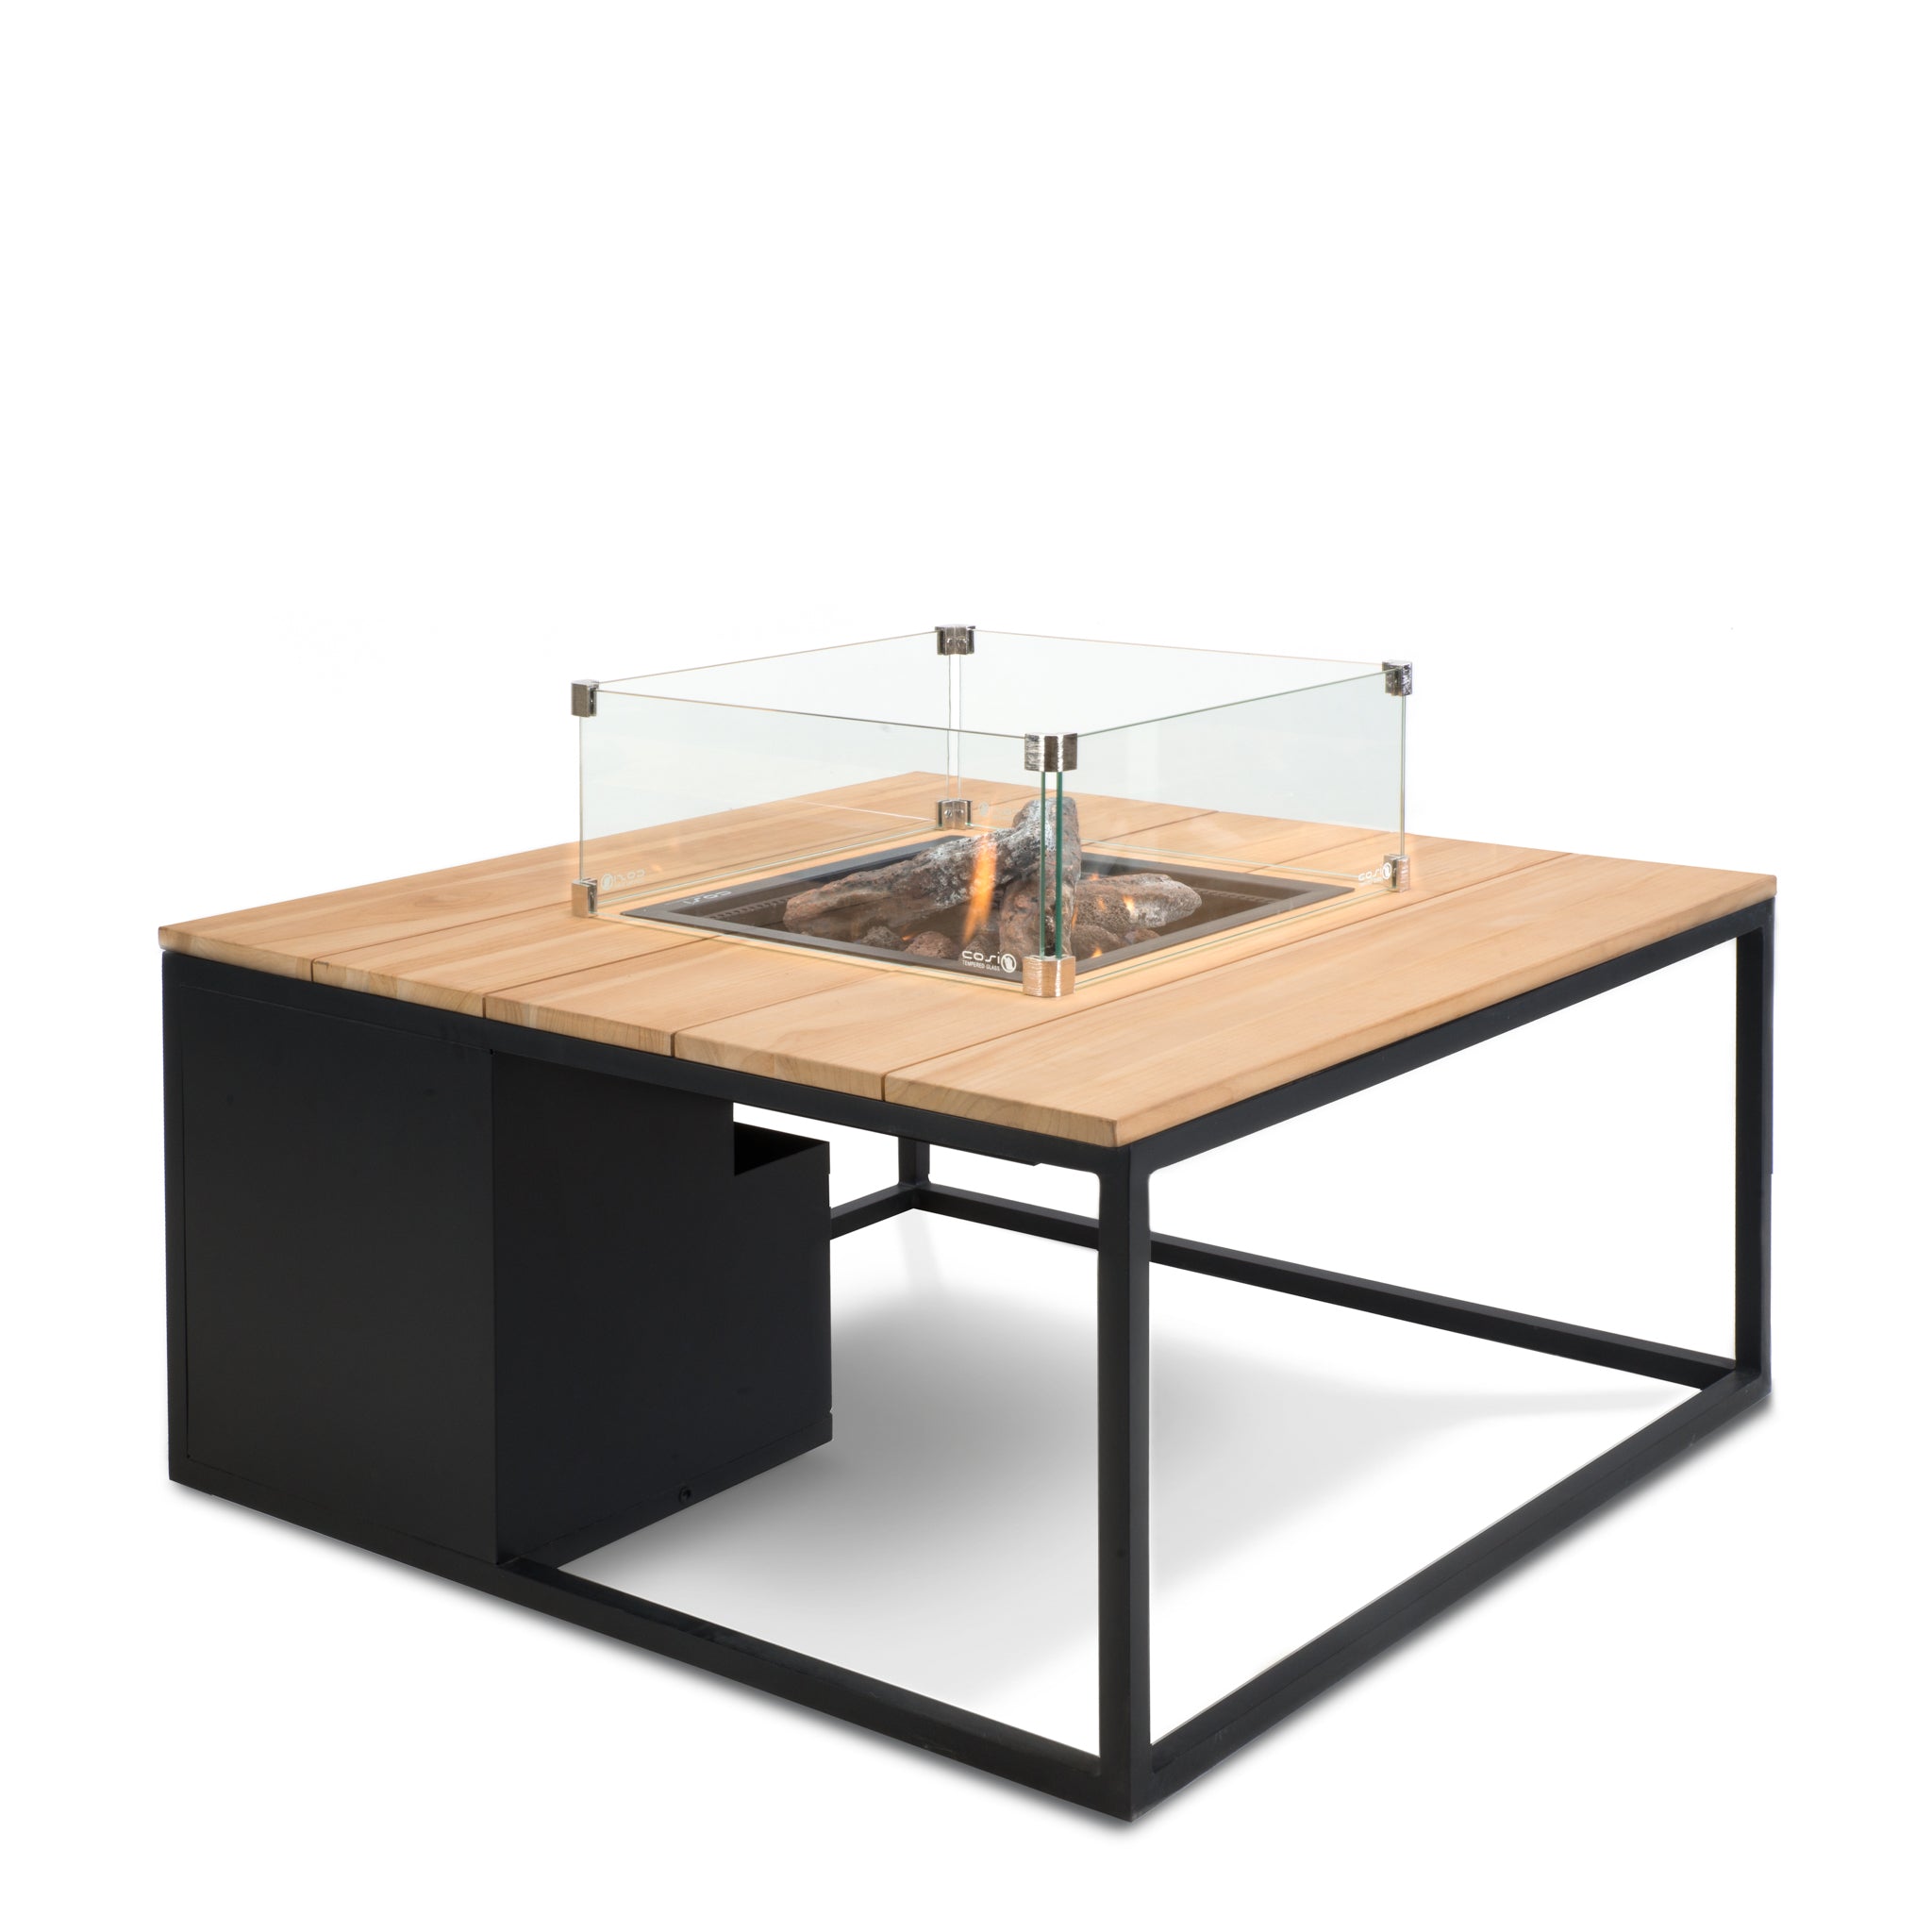 Cosiloft 100 Black and Teak Fire Pit Table